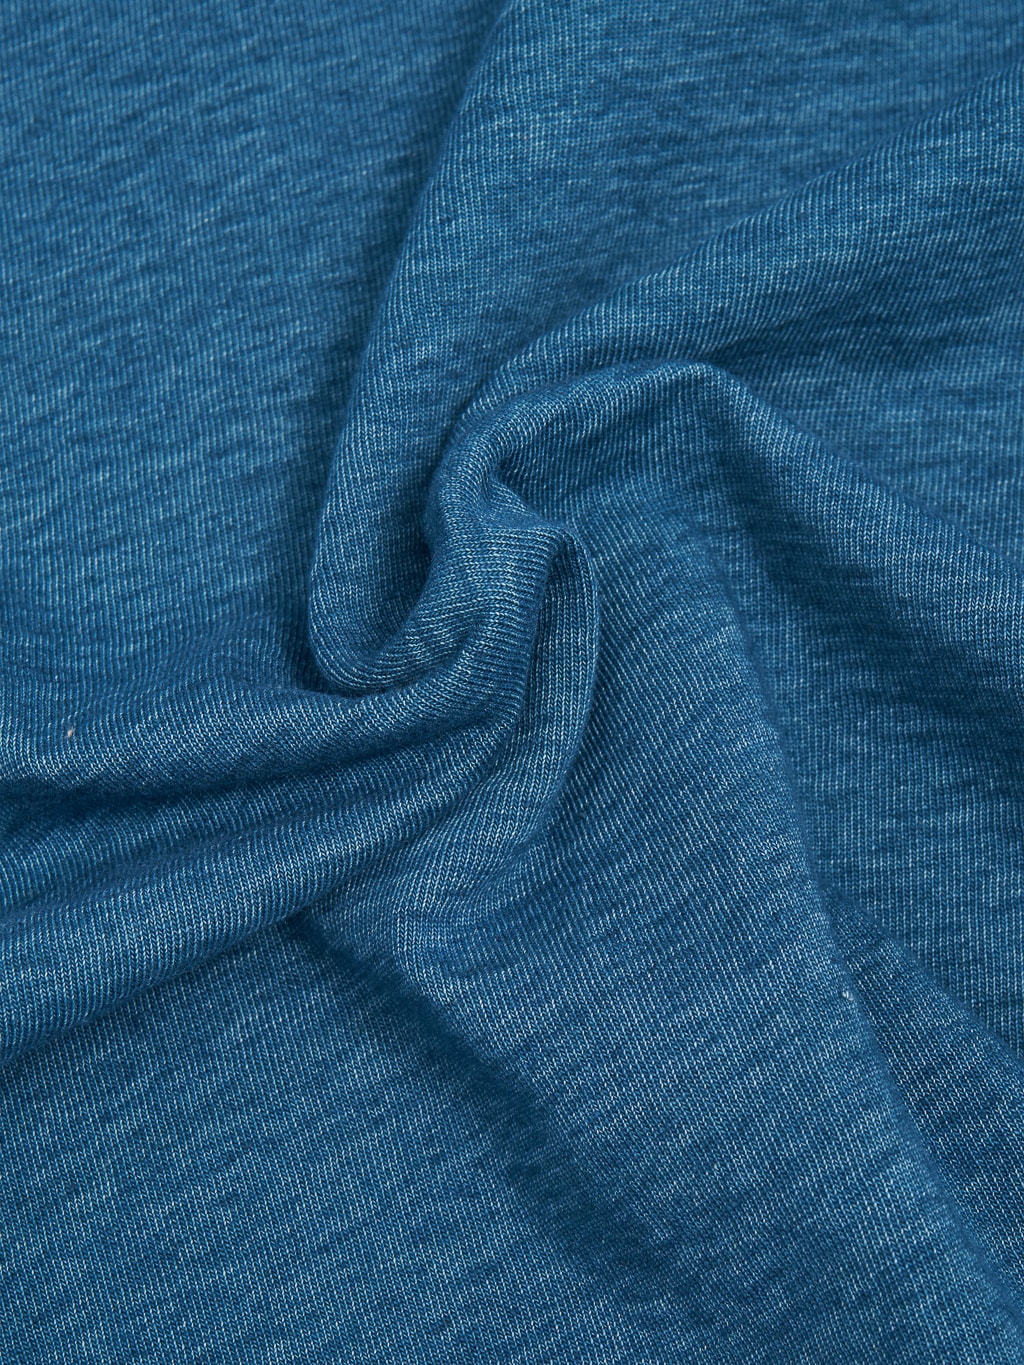 Pure Blue Japan SS5011 Greencast Indigo Dyed Crewneck TShirt texture